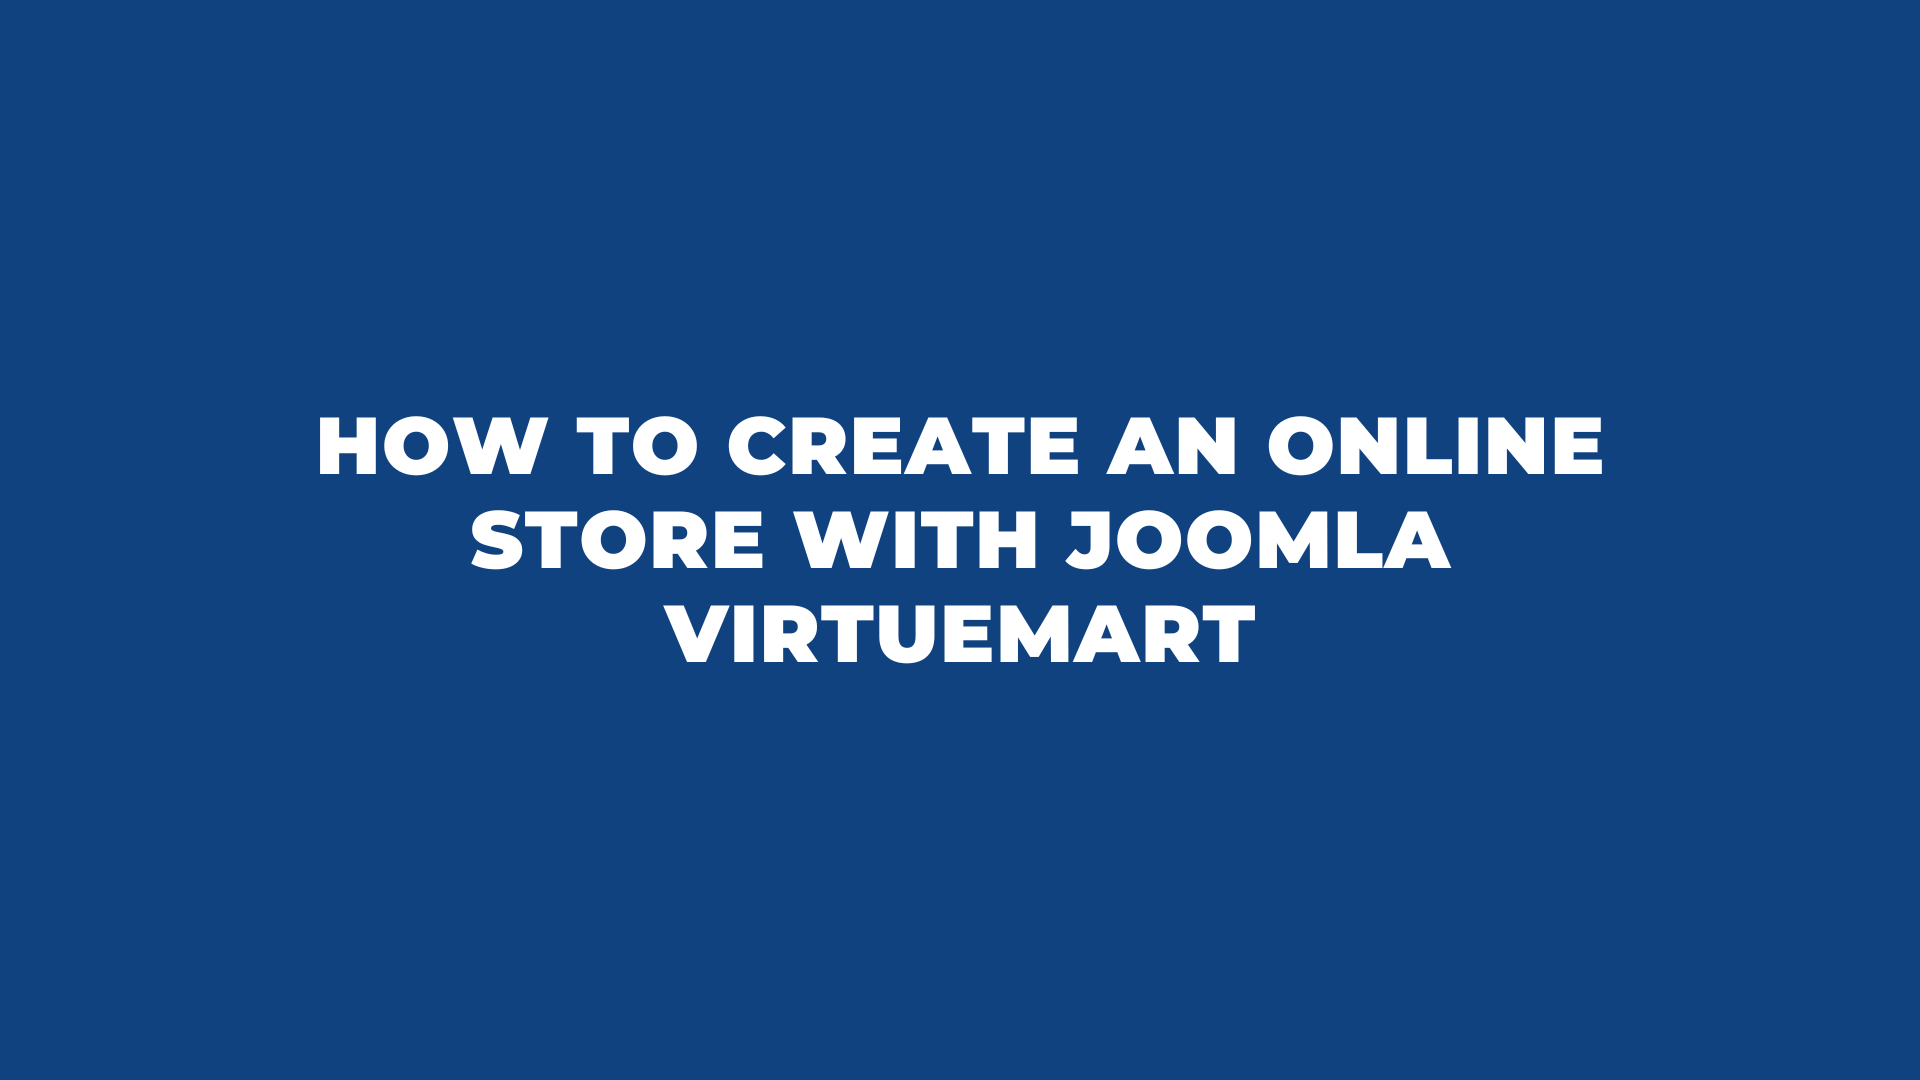 Joomla News: How to create an online store with Joomla VirtueMart